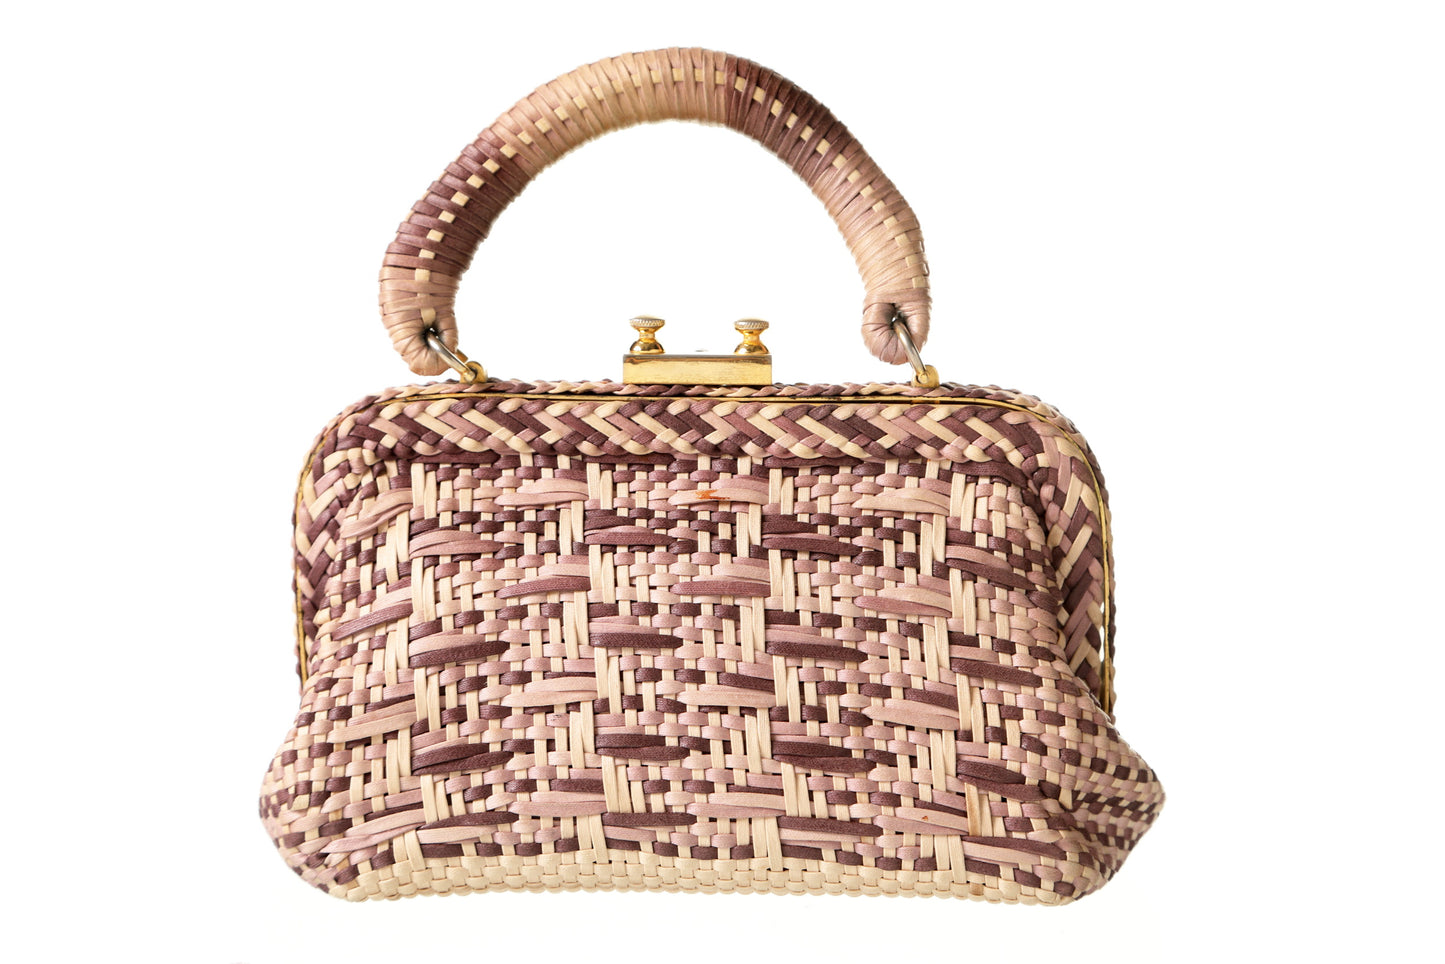 Roberta di Camerino handbag from the 50s with woven ribbon